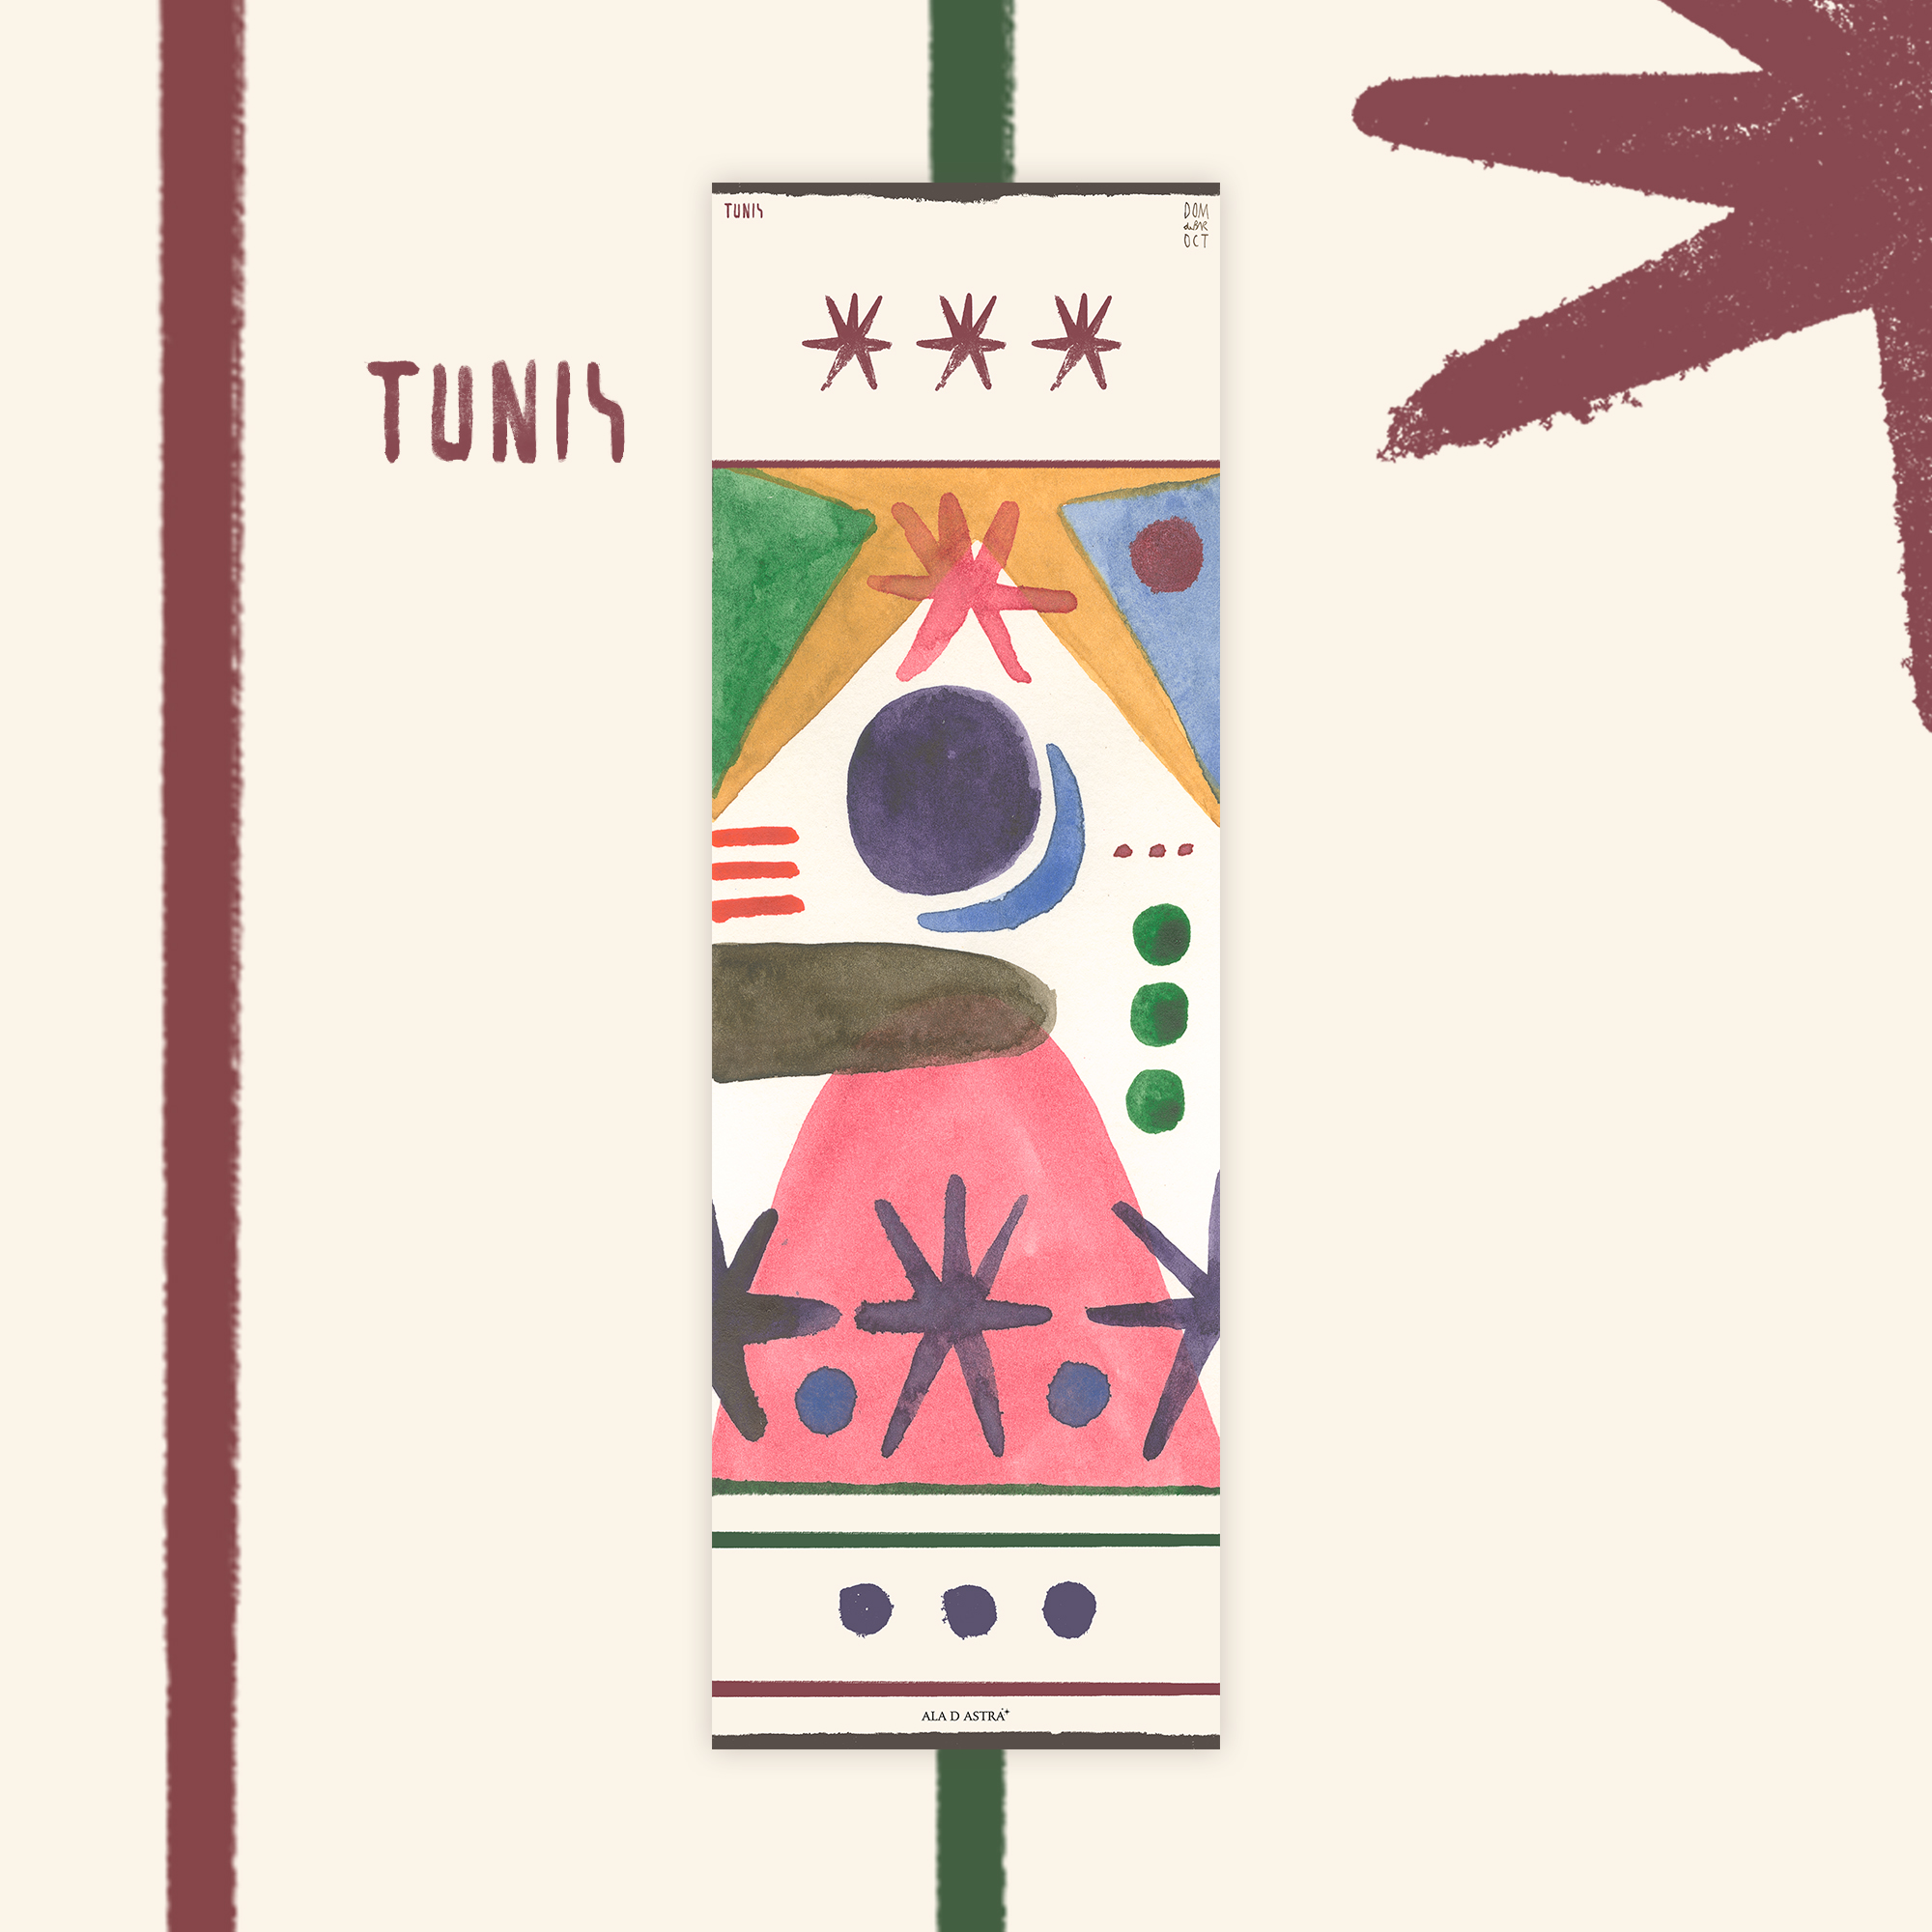 tunisreise collection: tunis yoga mat